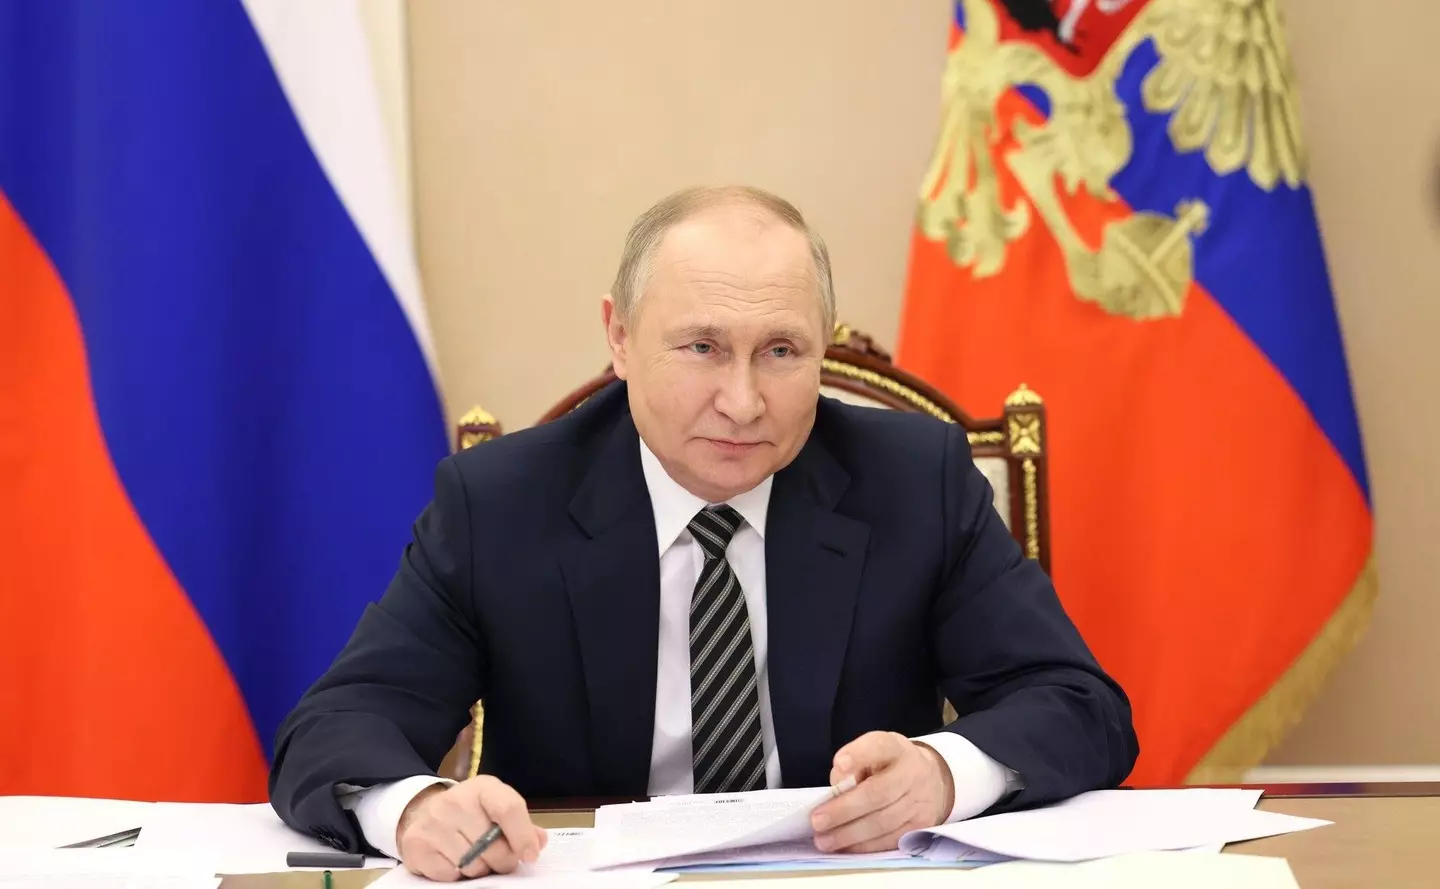 People believe Vladimir Putin may be seriously ill.